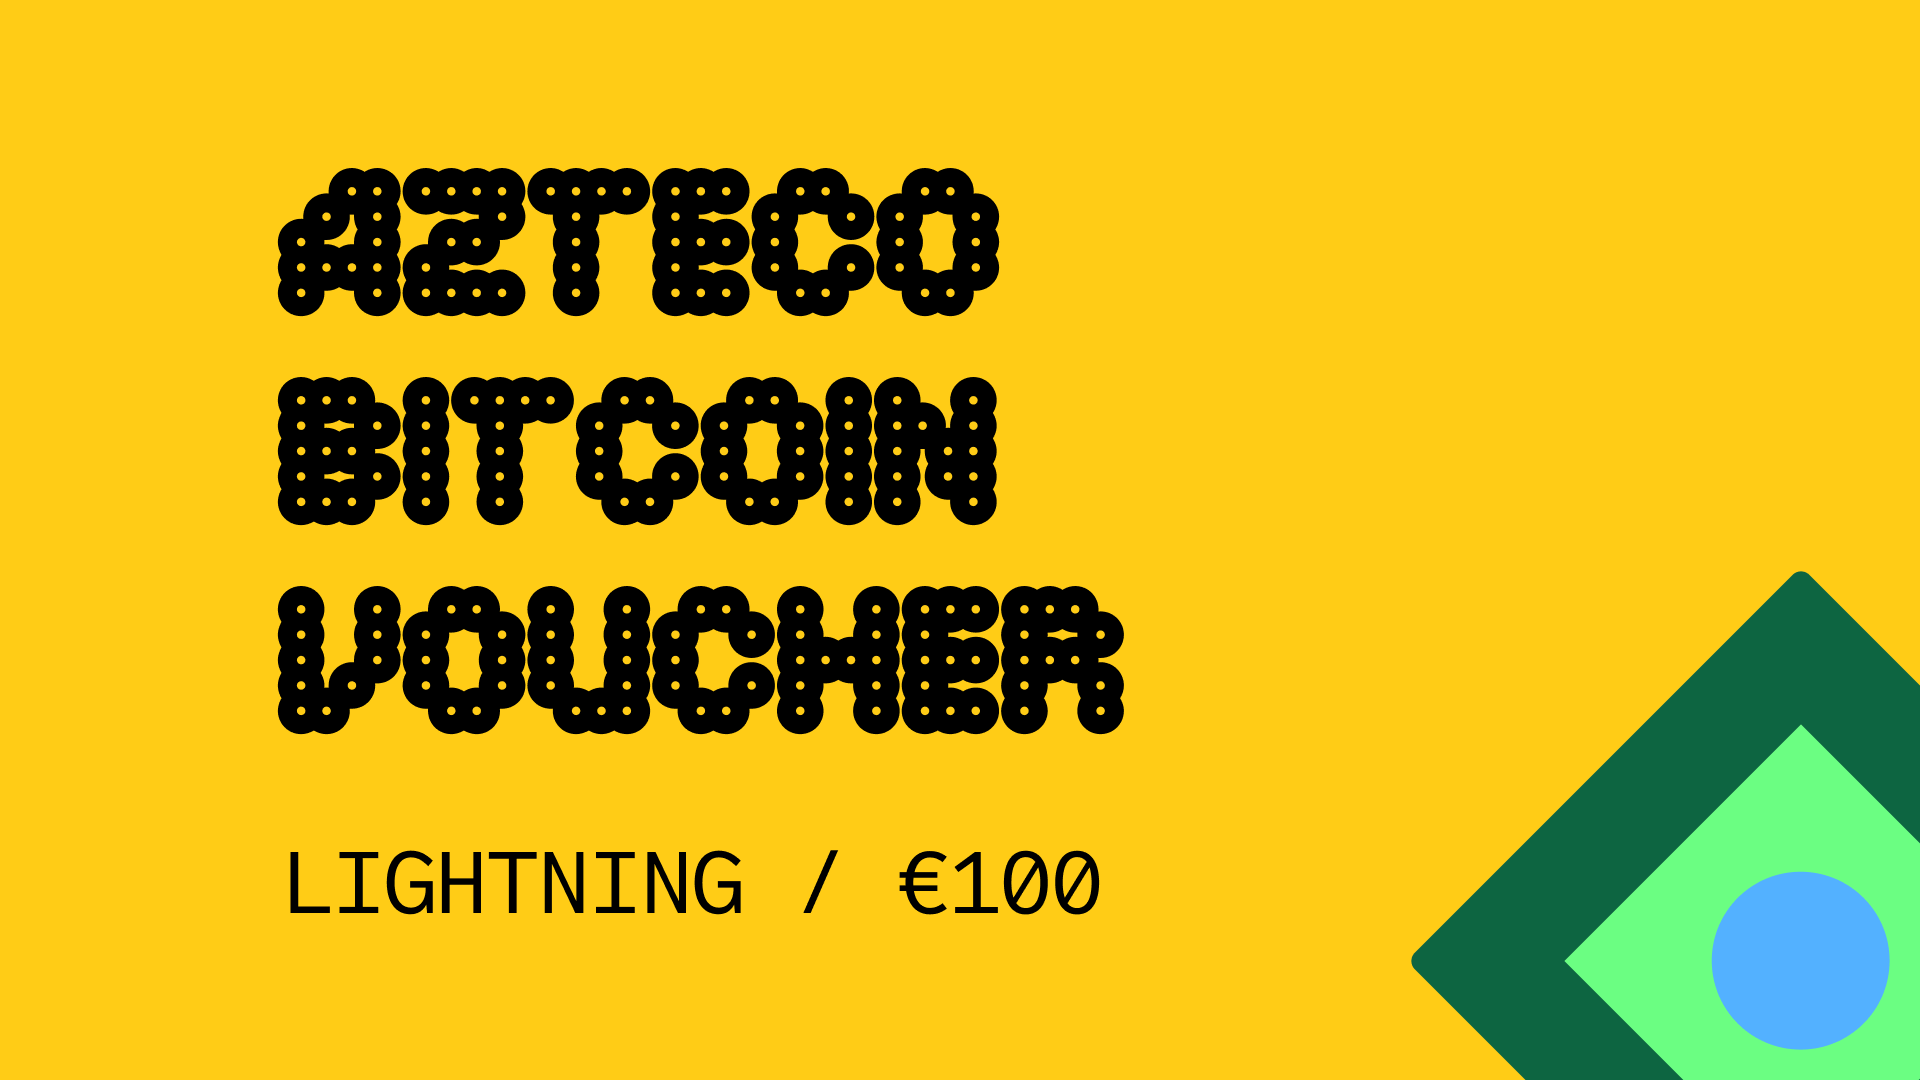 (112.98$) Azteco Bitcoin Lighting €100 Voucher